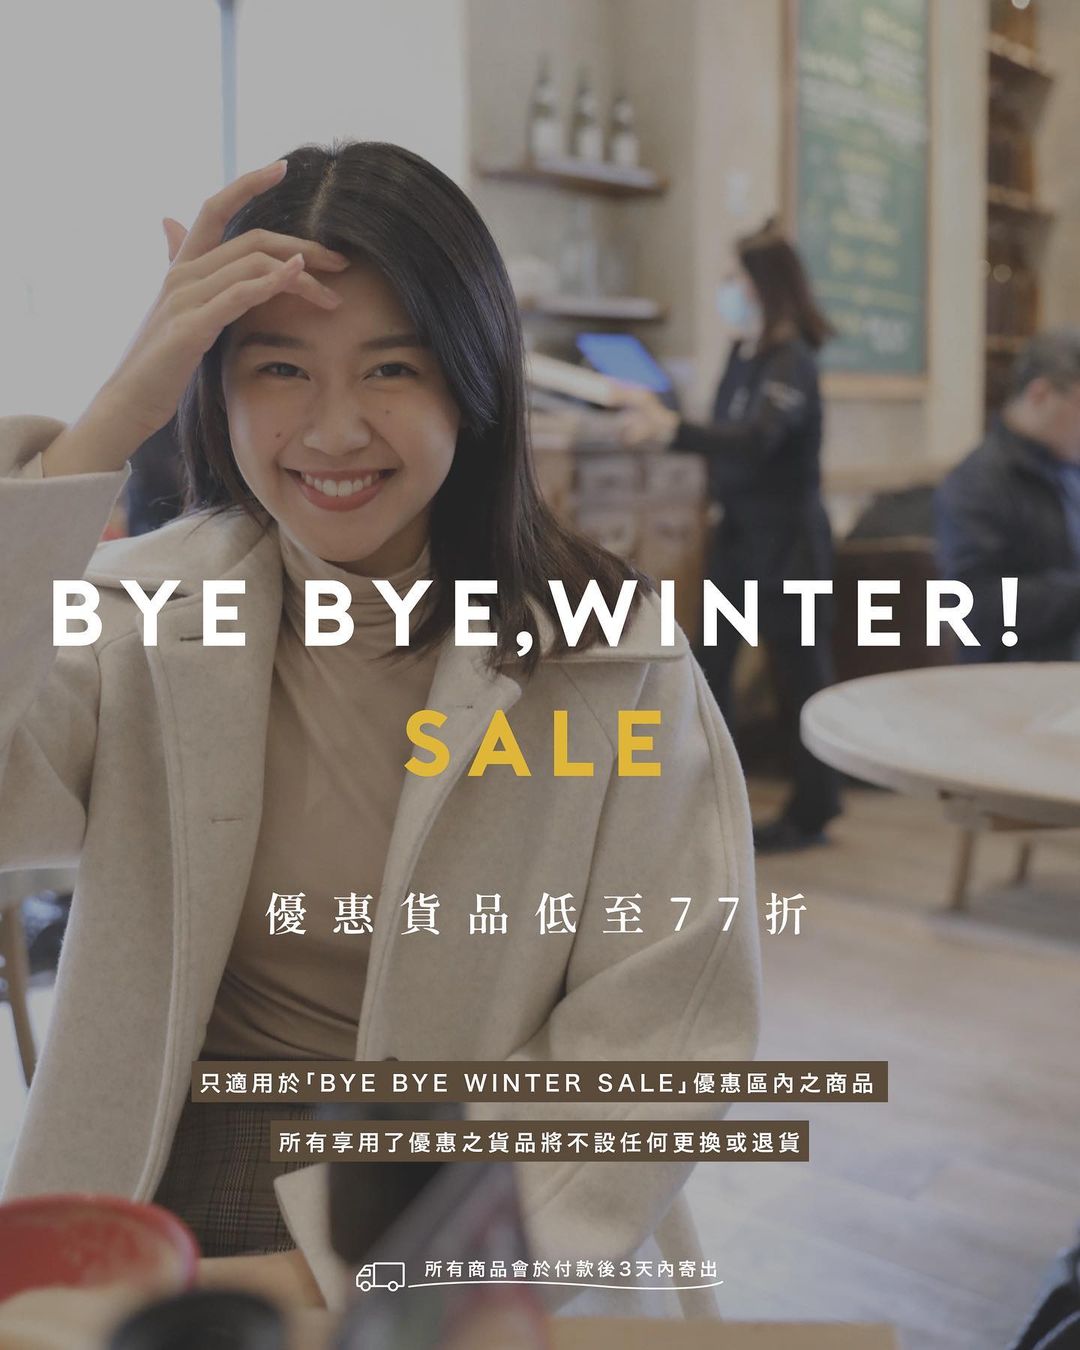  【 Bye bye, Winter! 】
轉季清貨優惠來了